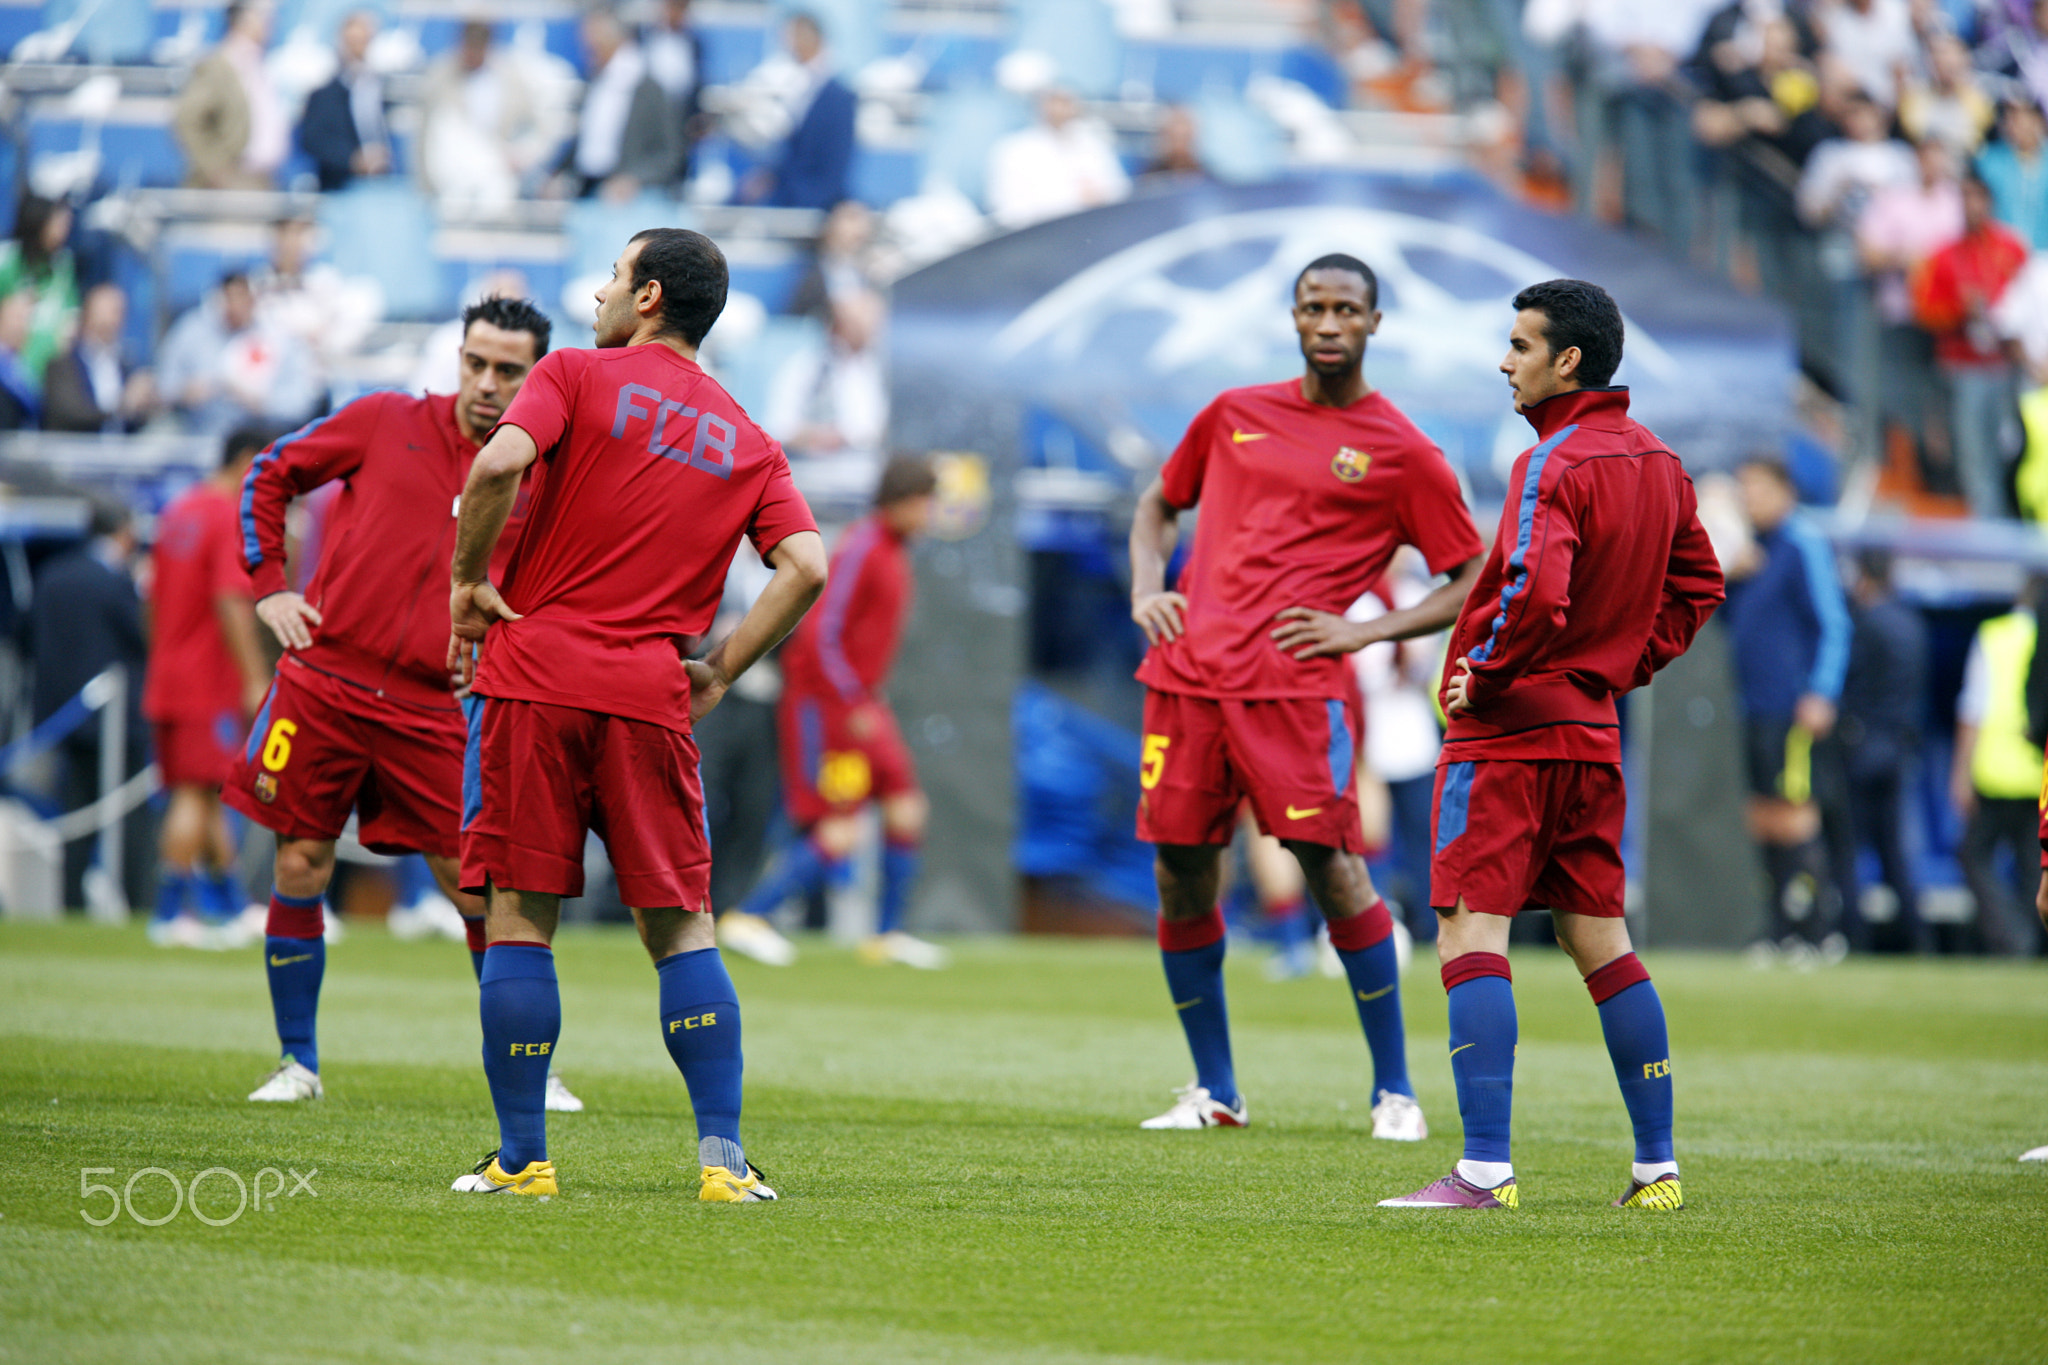 Xavi, Mascherano, Keita and Pedro (left to right) warming up before the UEFA Champions League Semifi